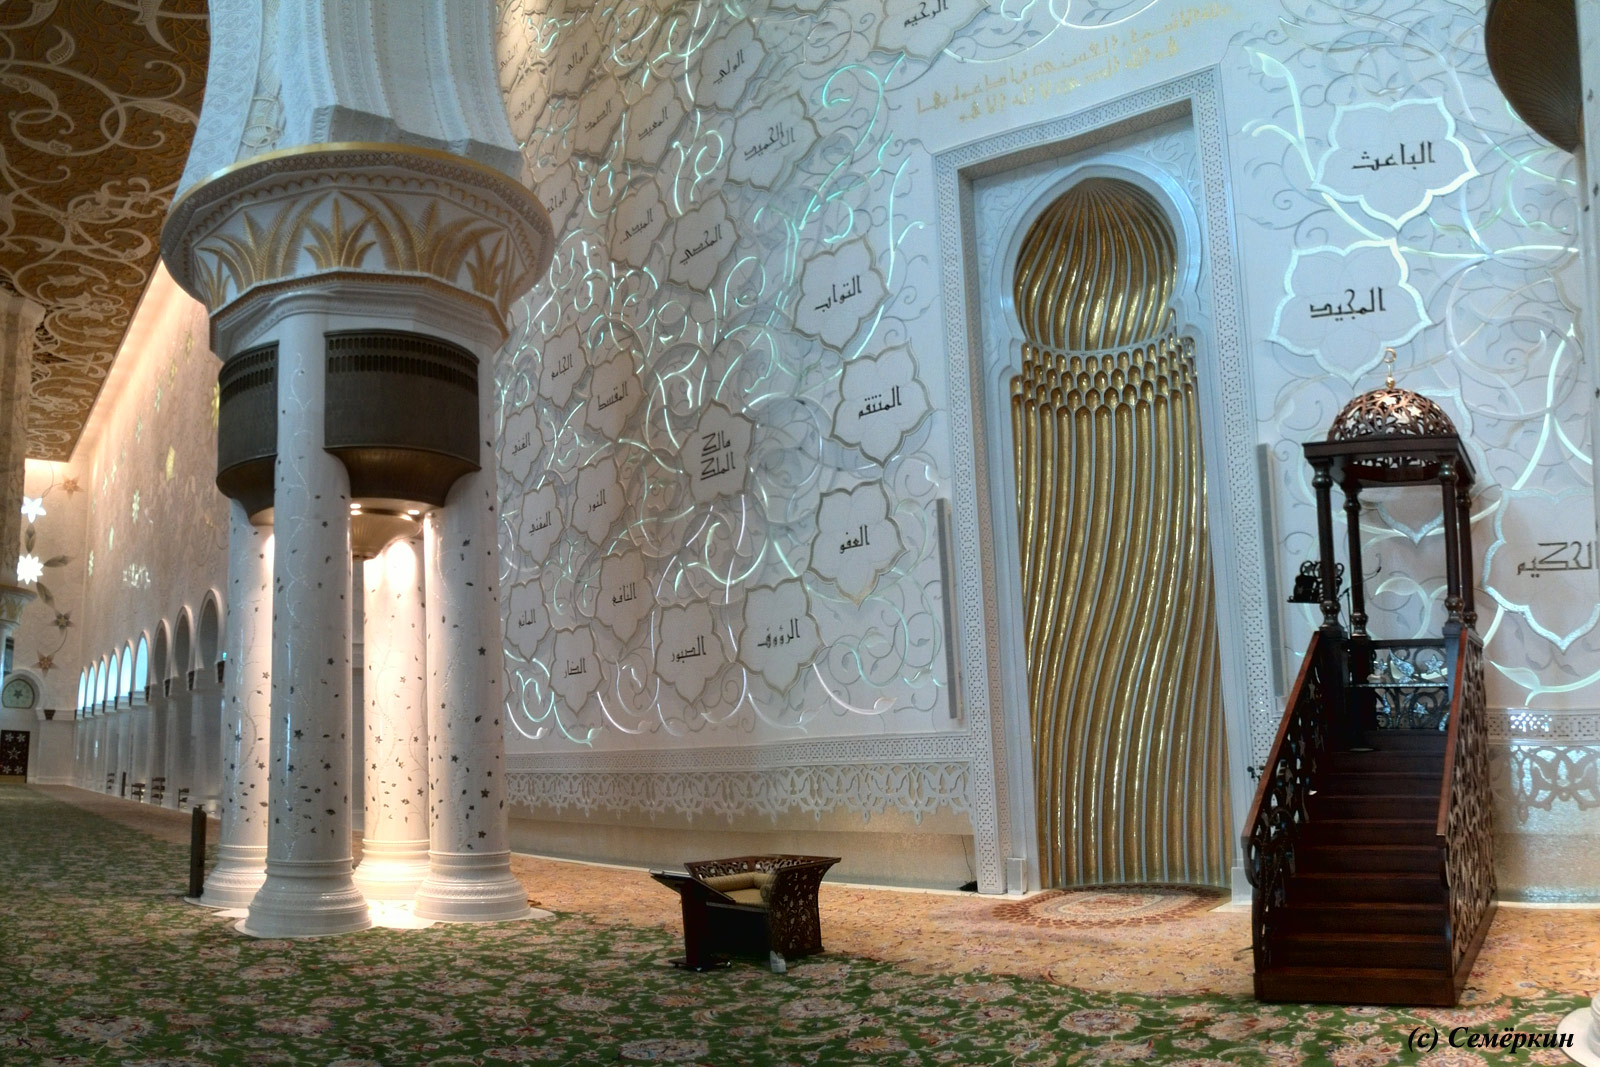 Мечеть шейха Зайда - 99 имен Аллаха и кресло для молитв